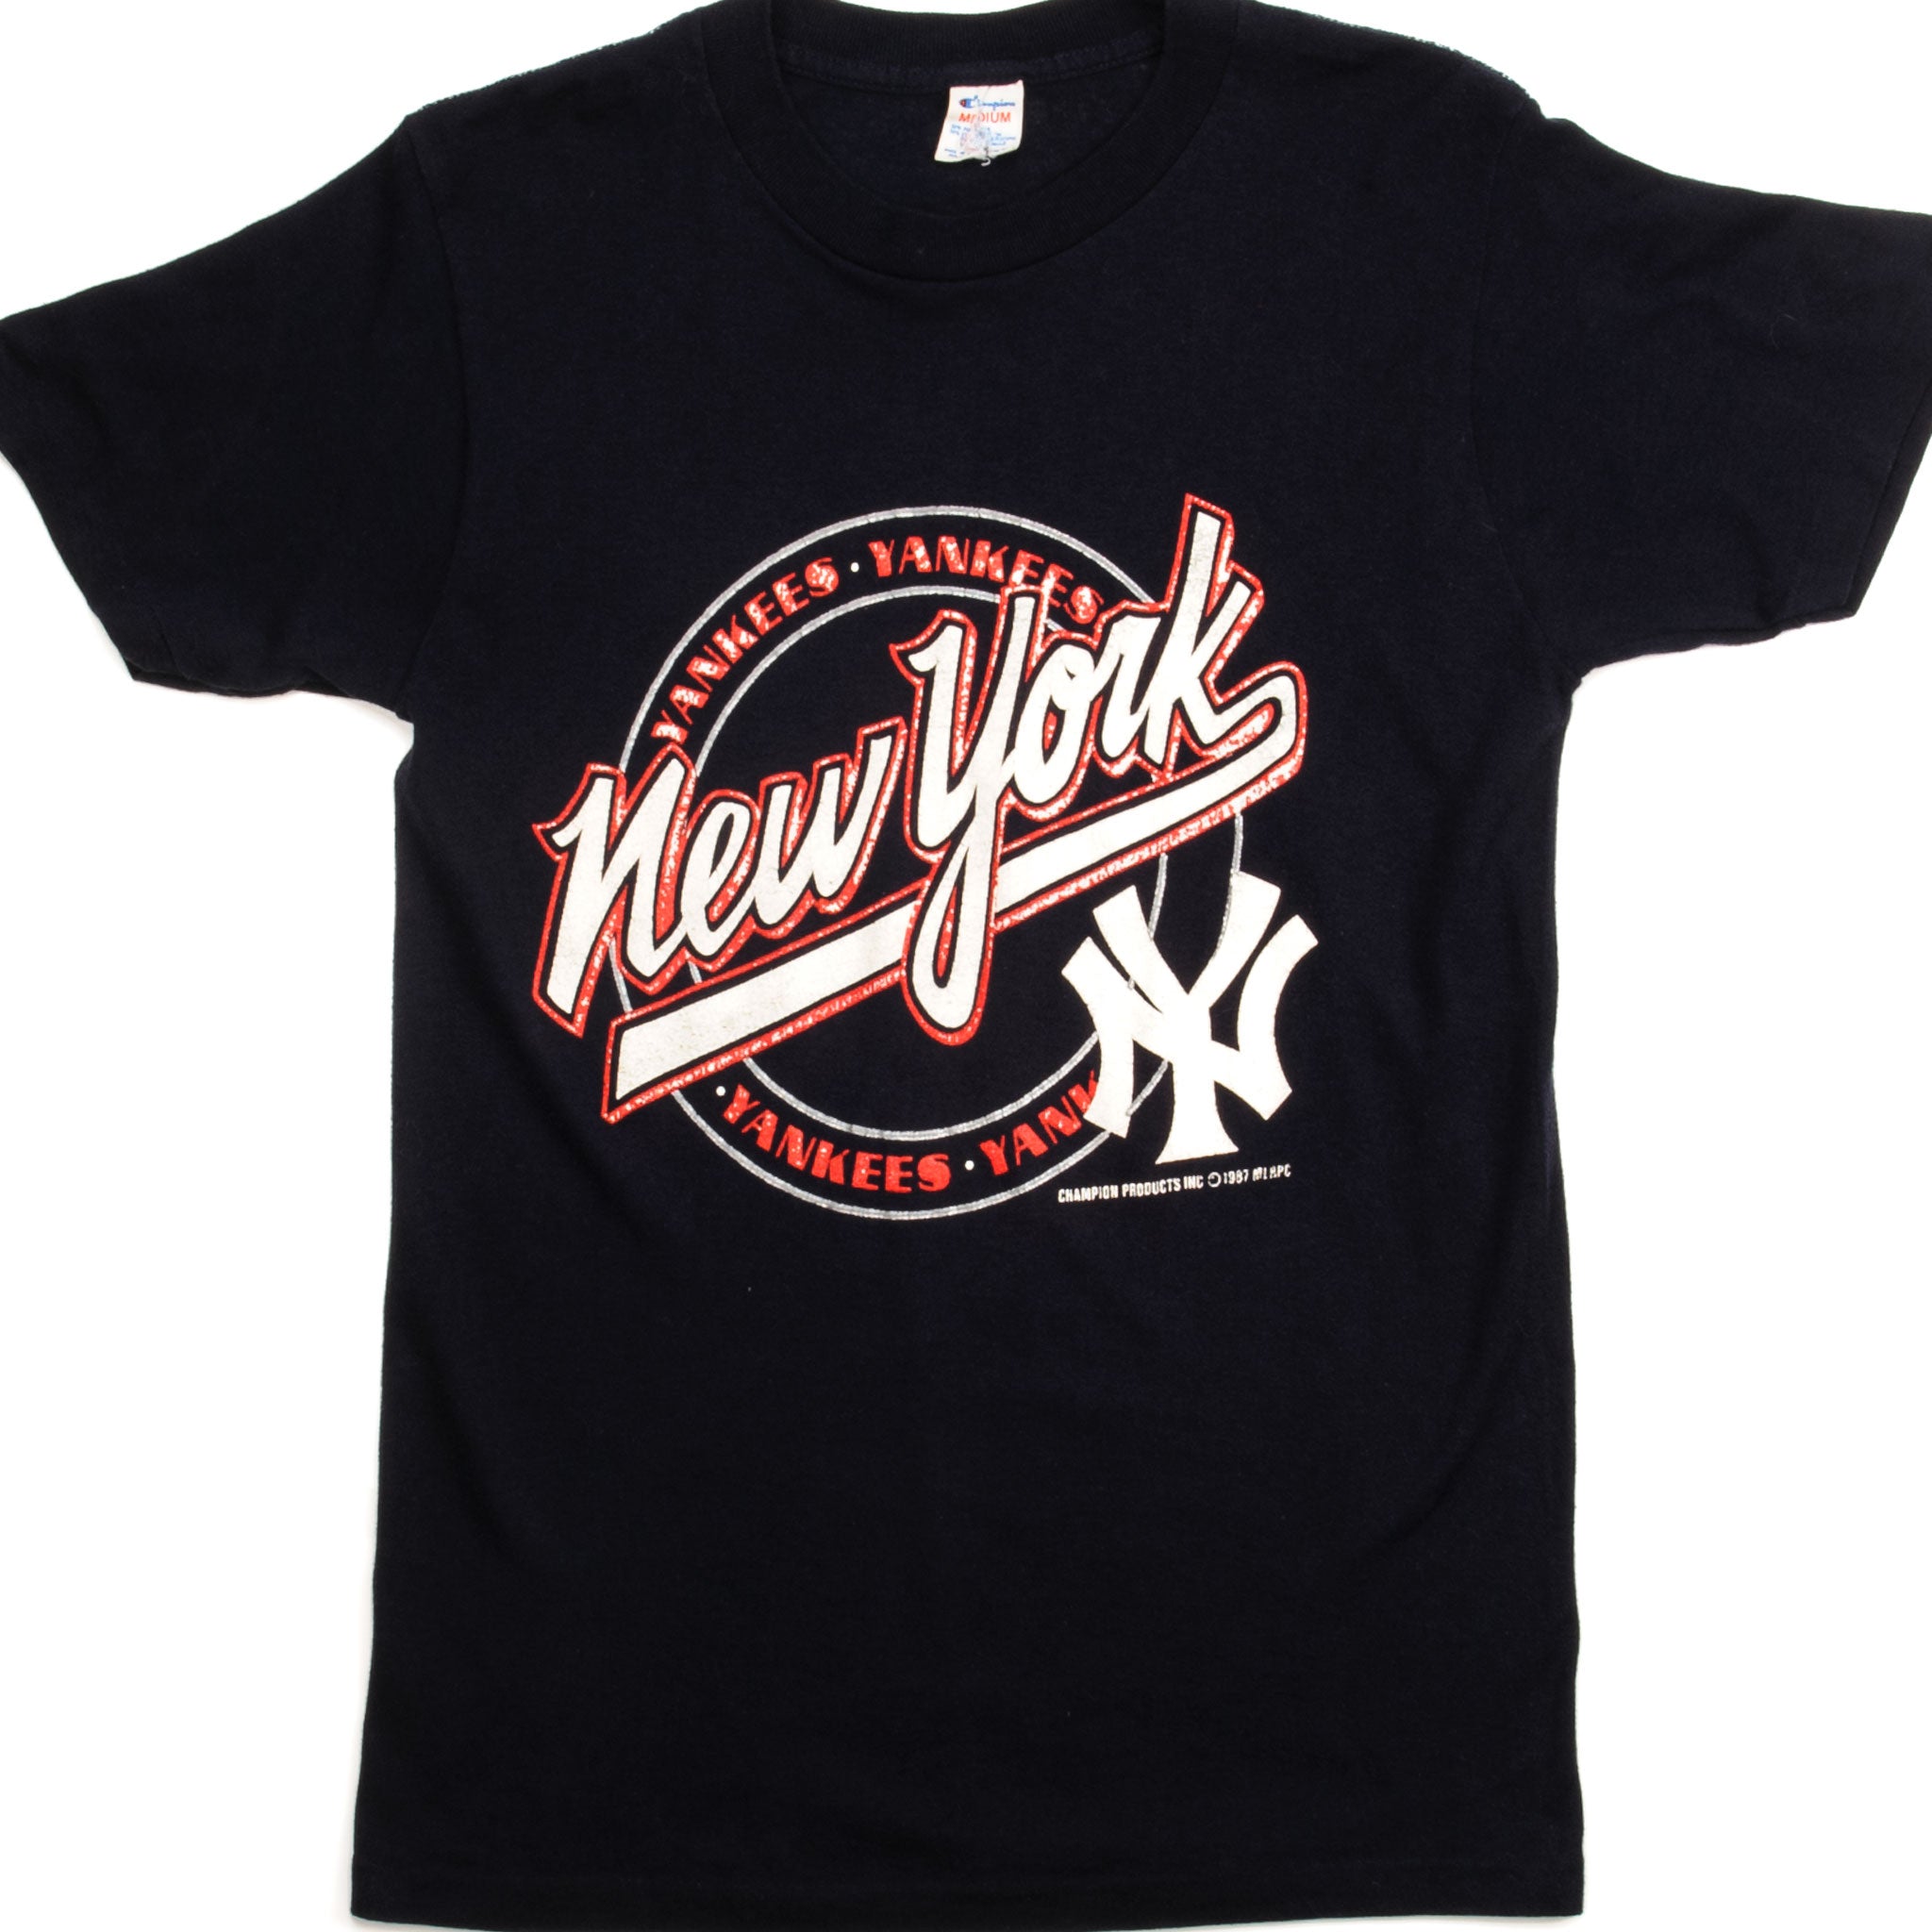 Vintage New York Yankees Logo T Shirt